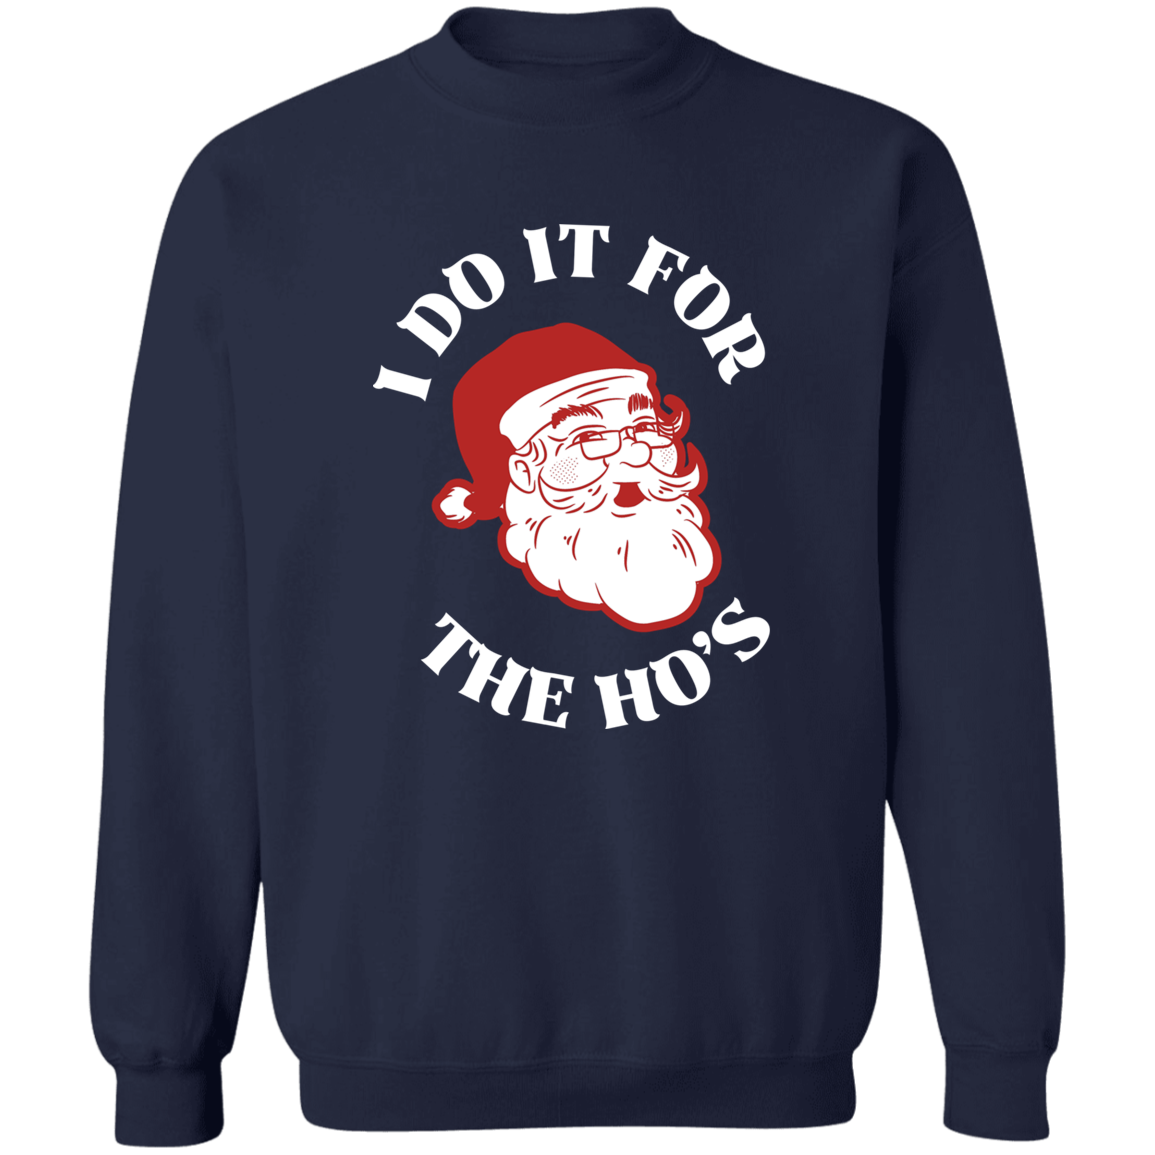 I DO IT FOR THE HO's Sweatshirt